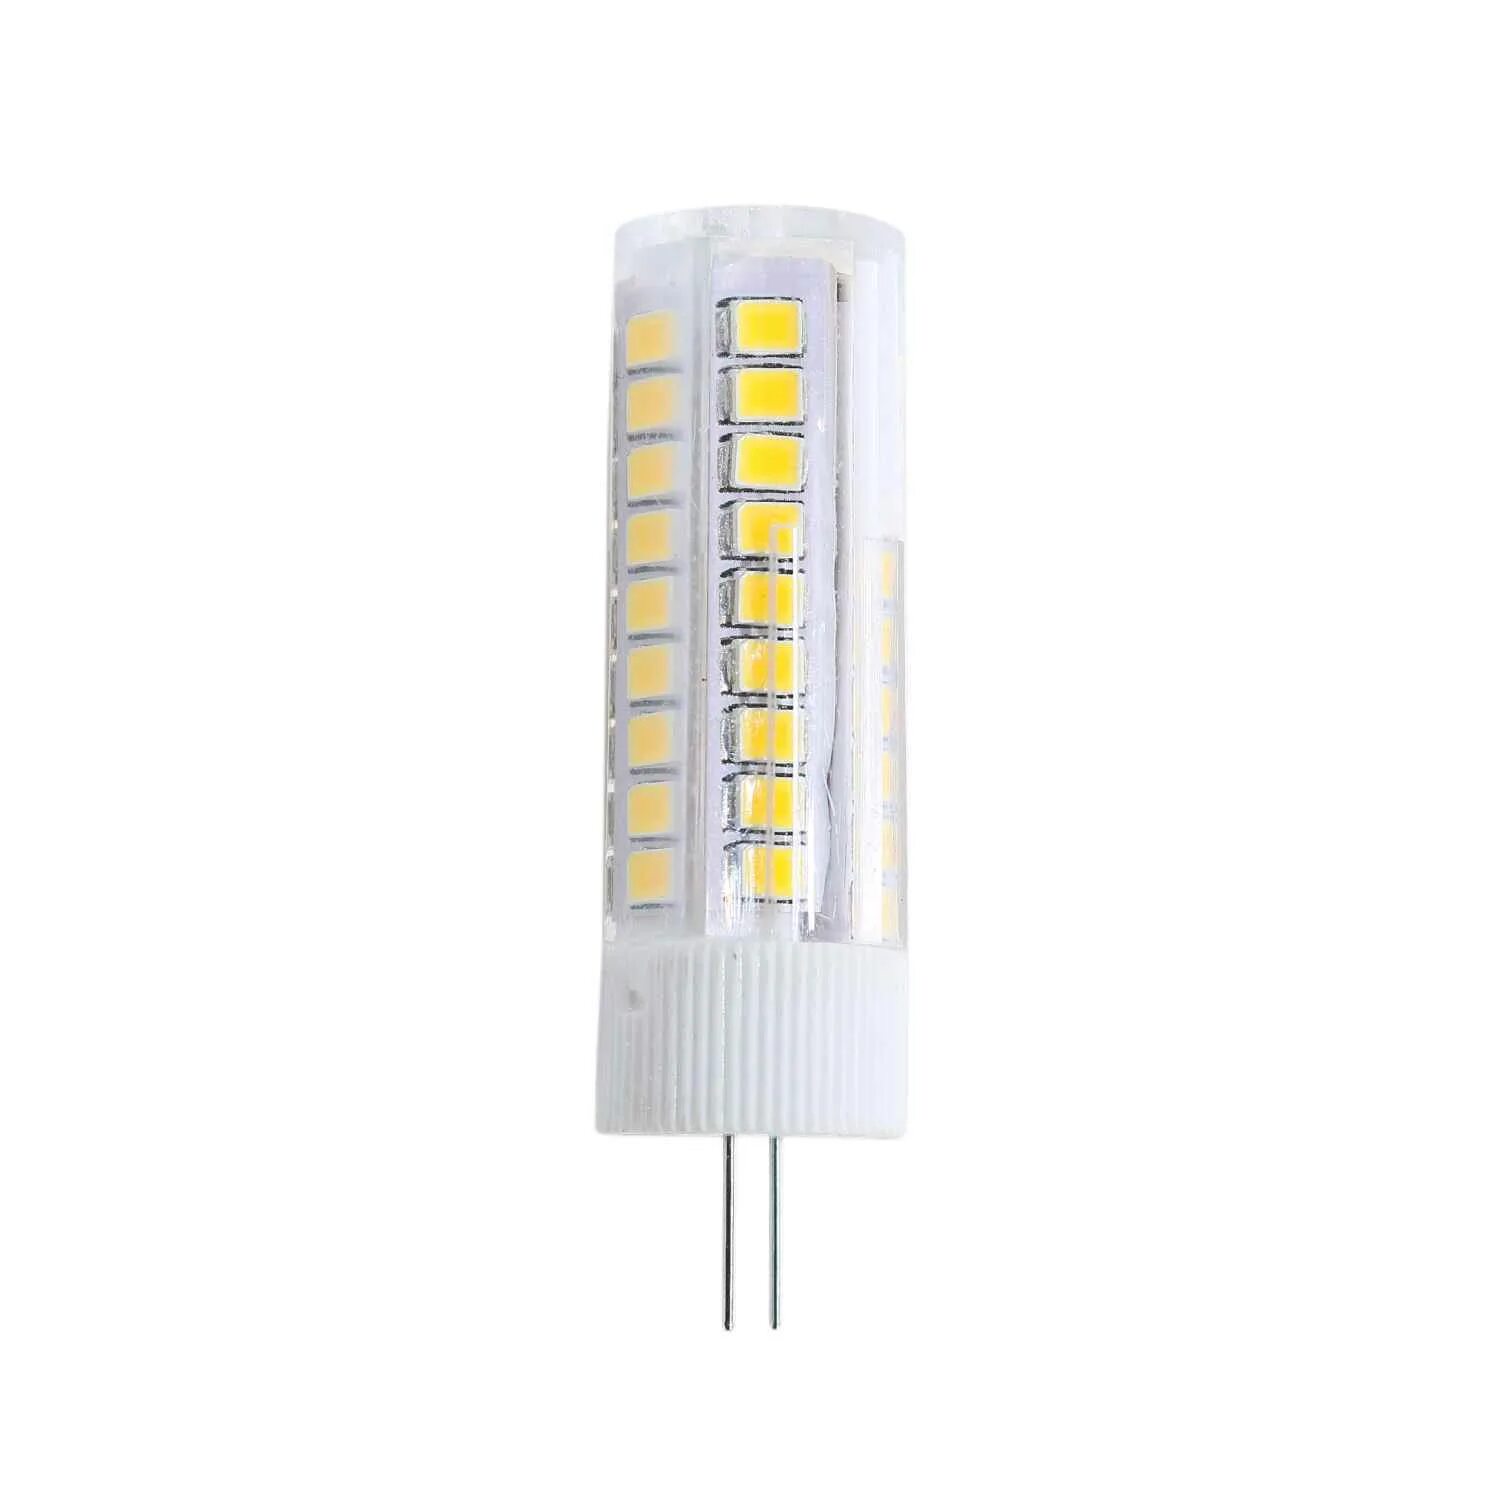 Светодиодные лампы led asd. Лампа светодиодная led-JC-VC 5вт 12в g4 4000к 450лм in Home. Лампа светодиодная led-JC 3вт 12в g4 6500к 290лм in Home 5шт. Лампа led g4 4.5w 12v 3000k. Лампа светодиодная led-g4 5вт 12в g4 6500к.